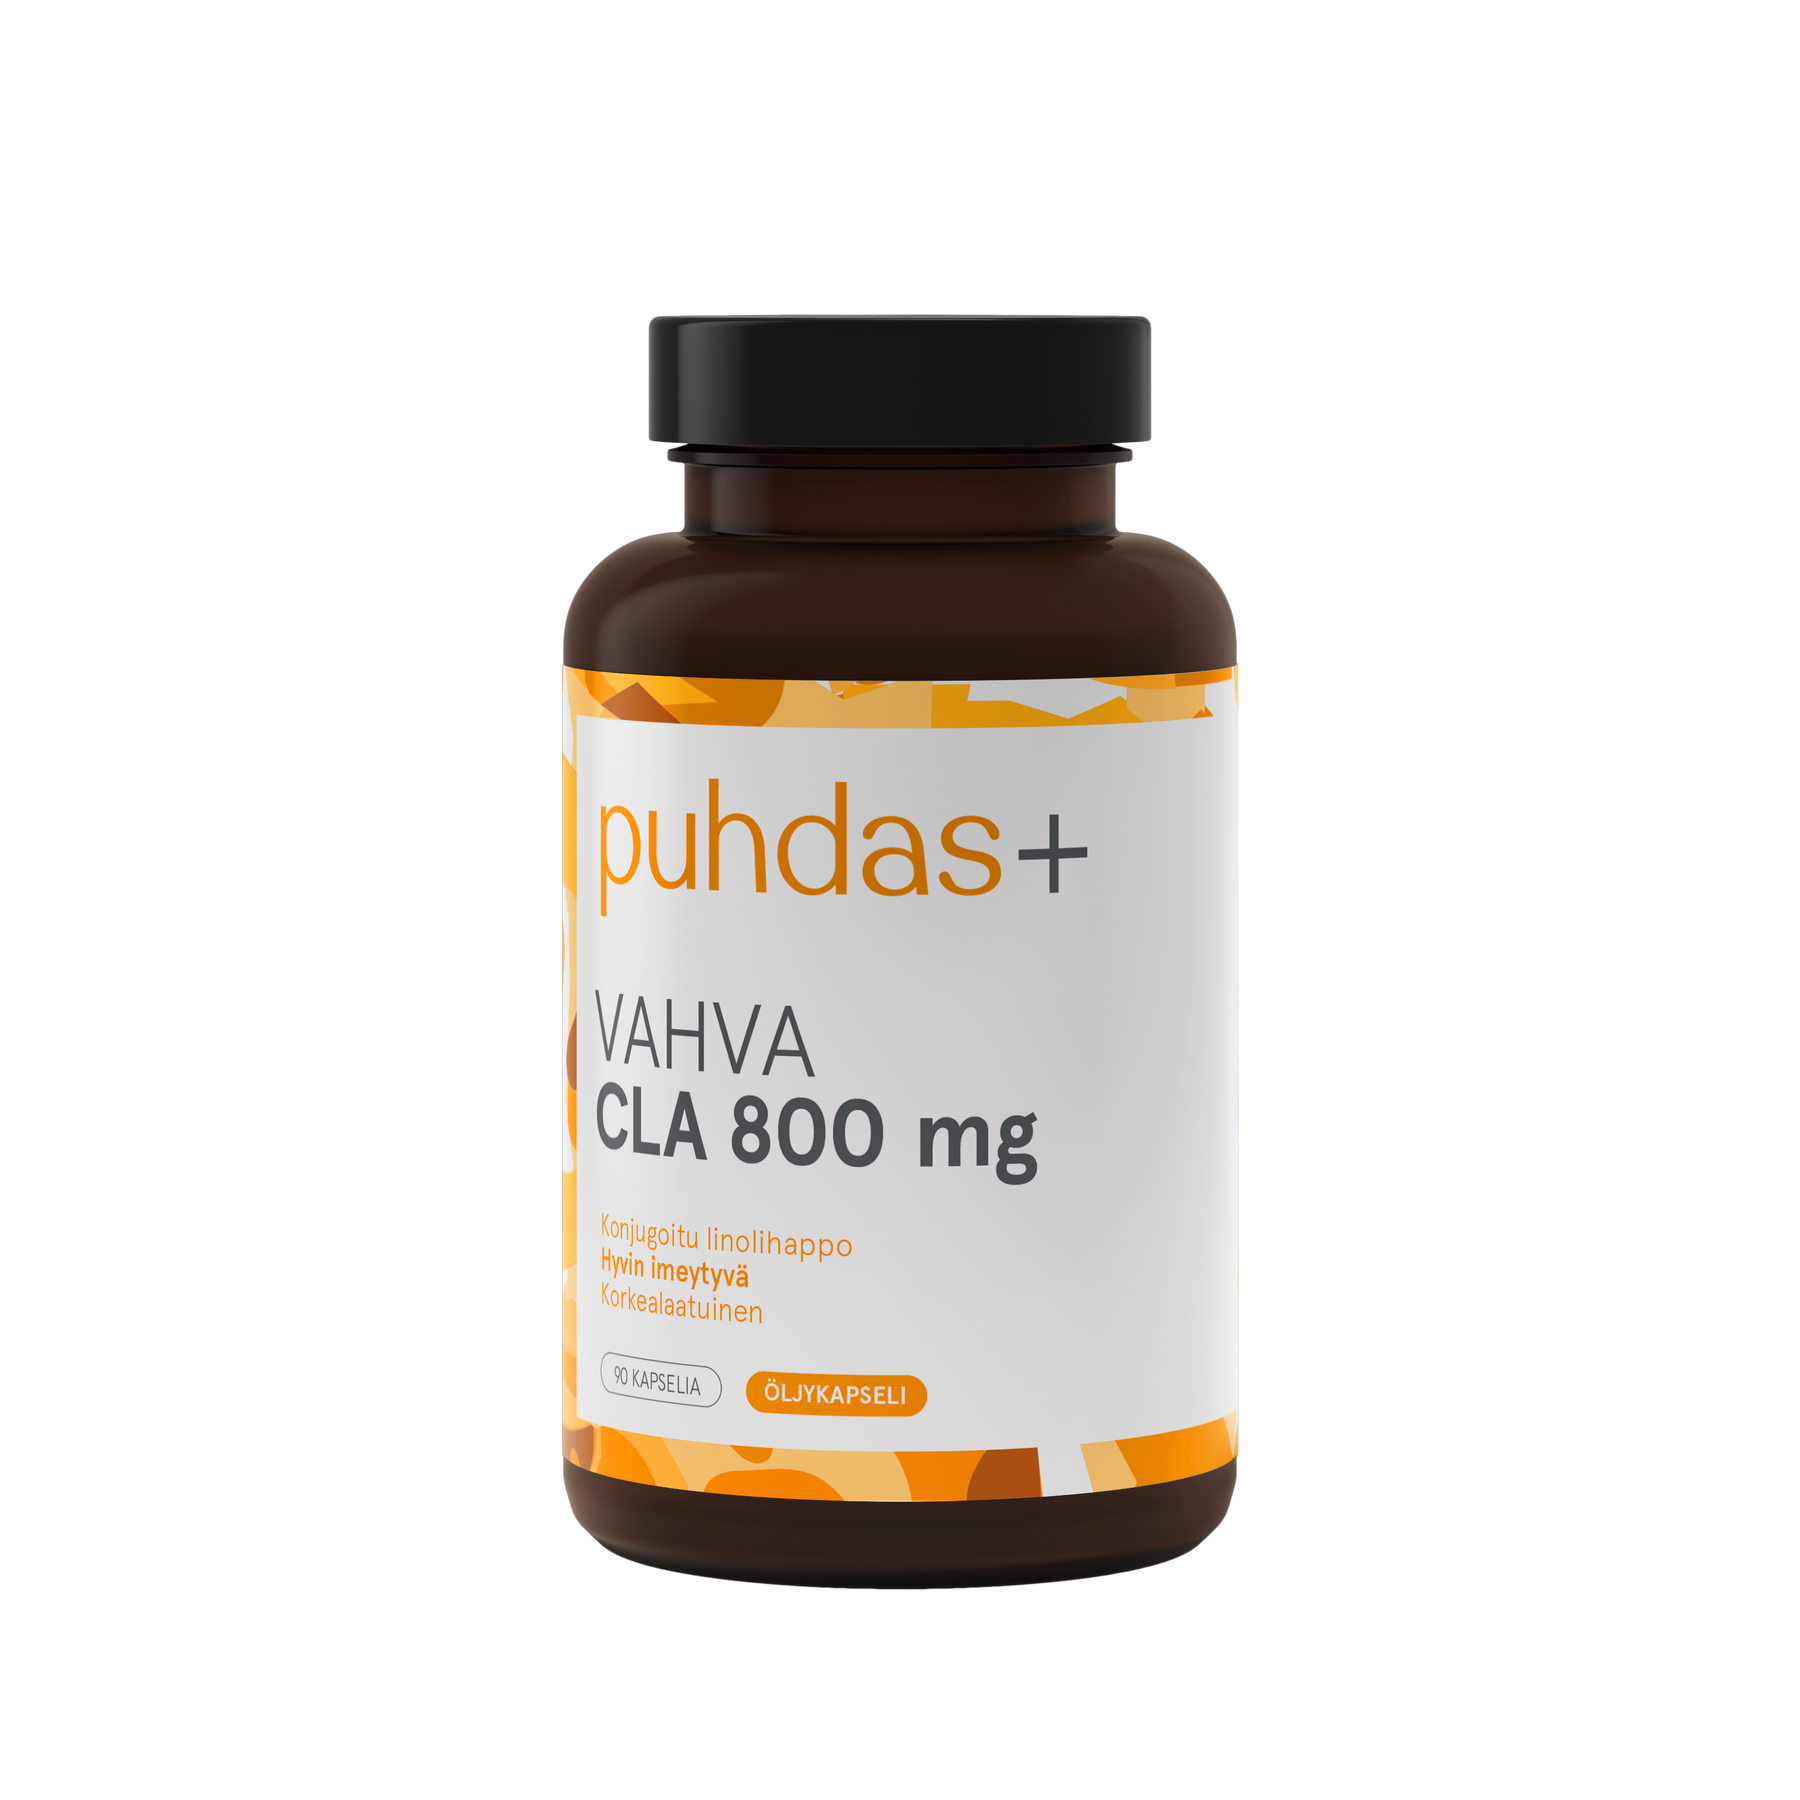 Puhdas+ Vahva CLA 800 mg 90 kaps.